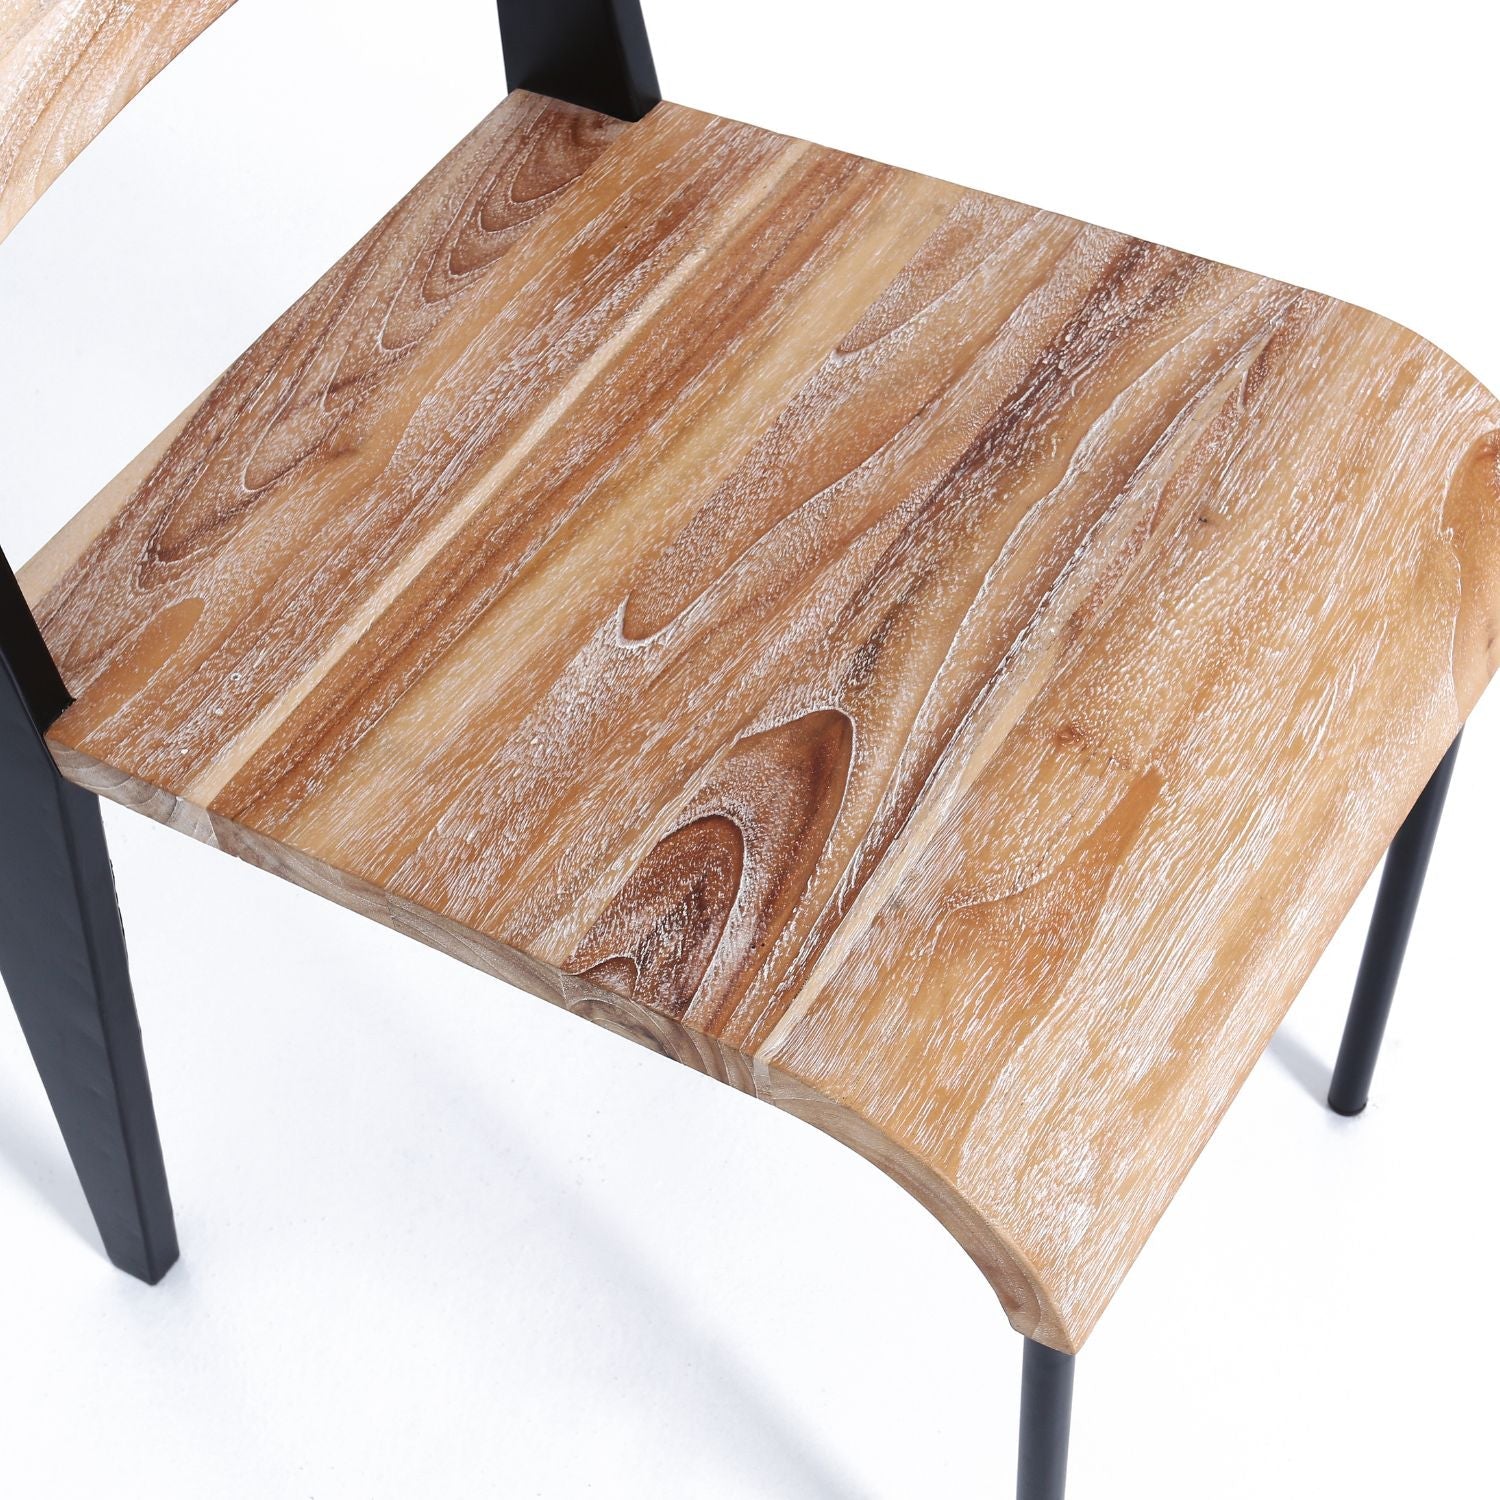 Vitruvian Office Chair - Valyou Furniture